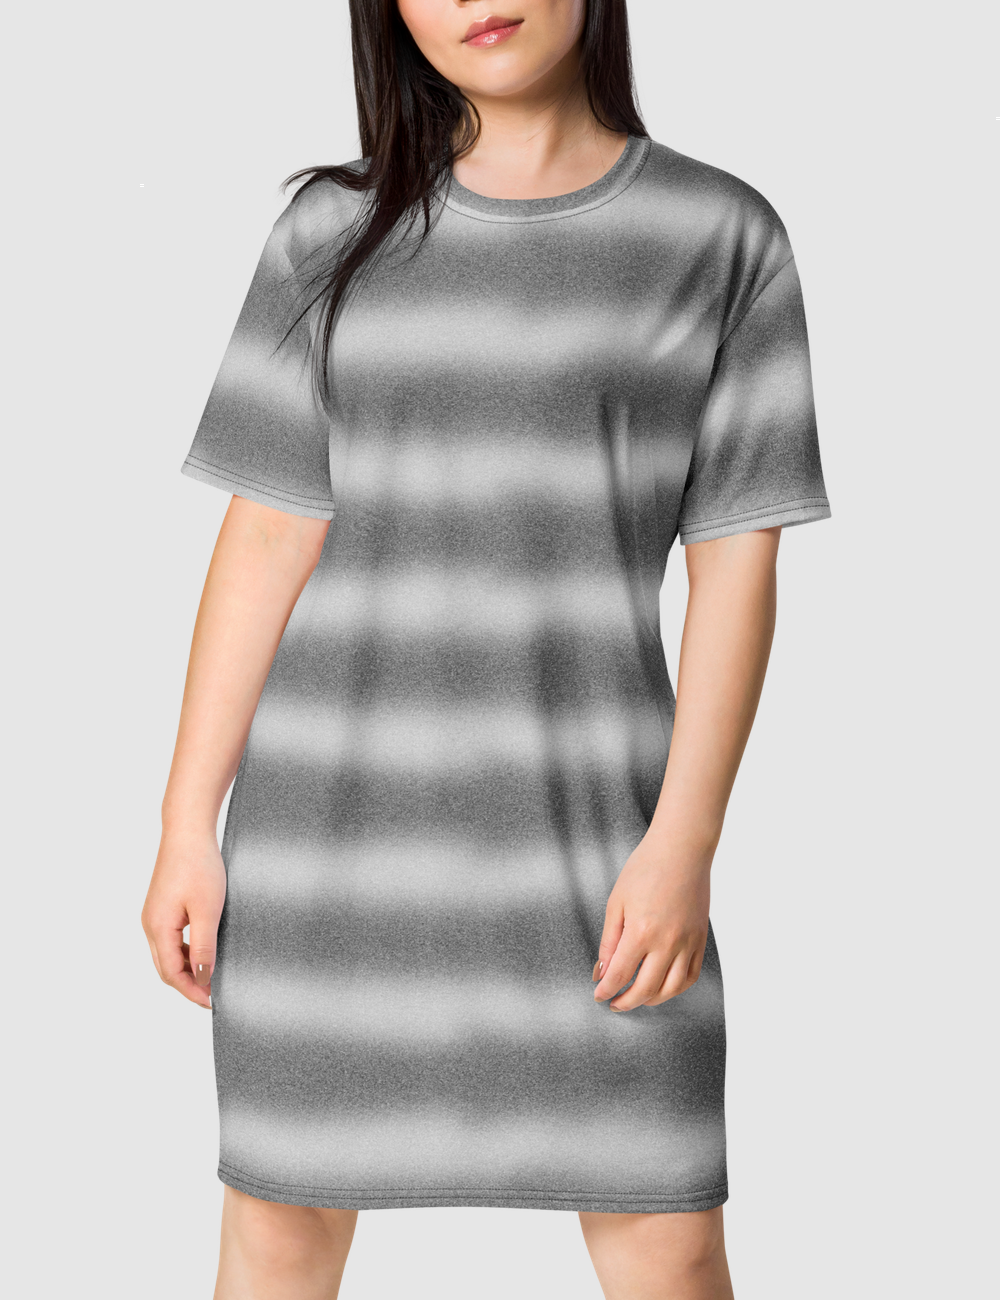 Abstract Grey Heather Tie Dye T-Shirt Dress OniTakai